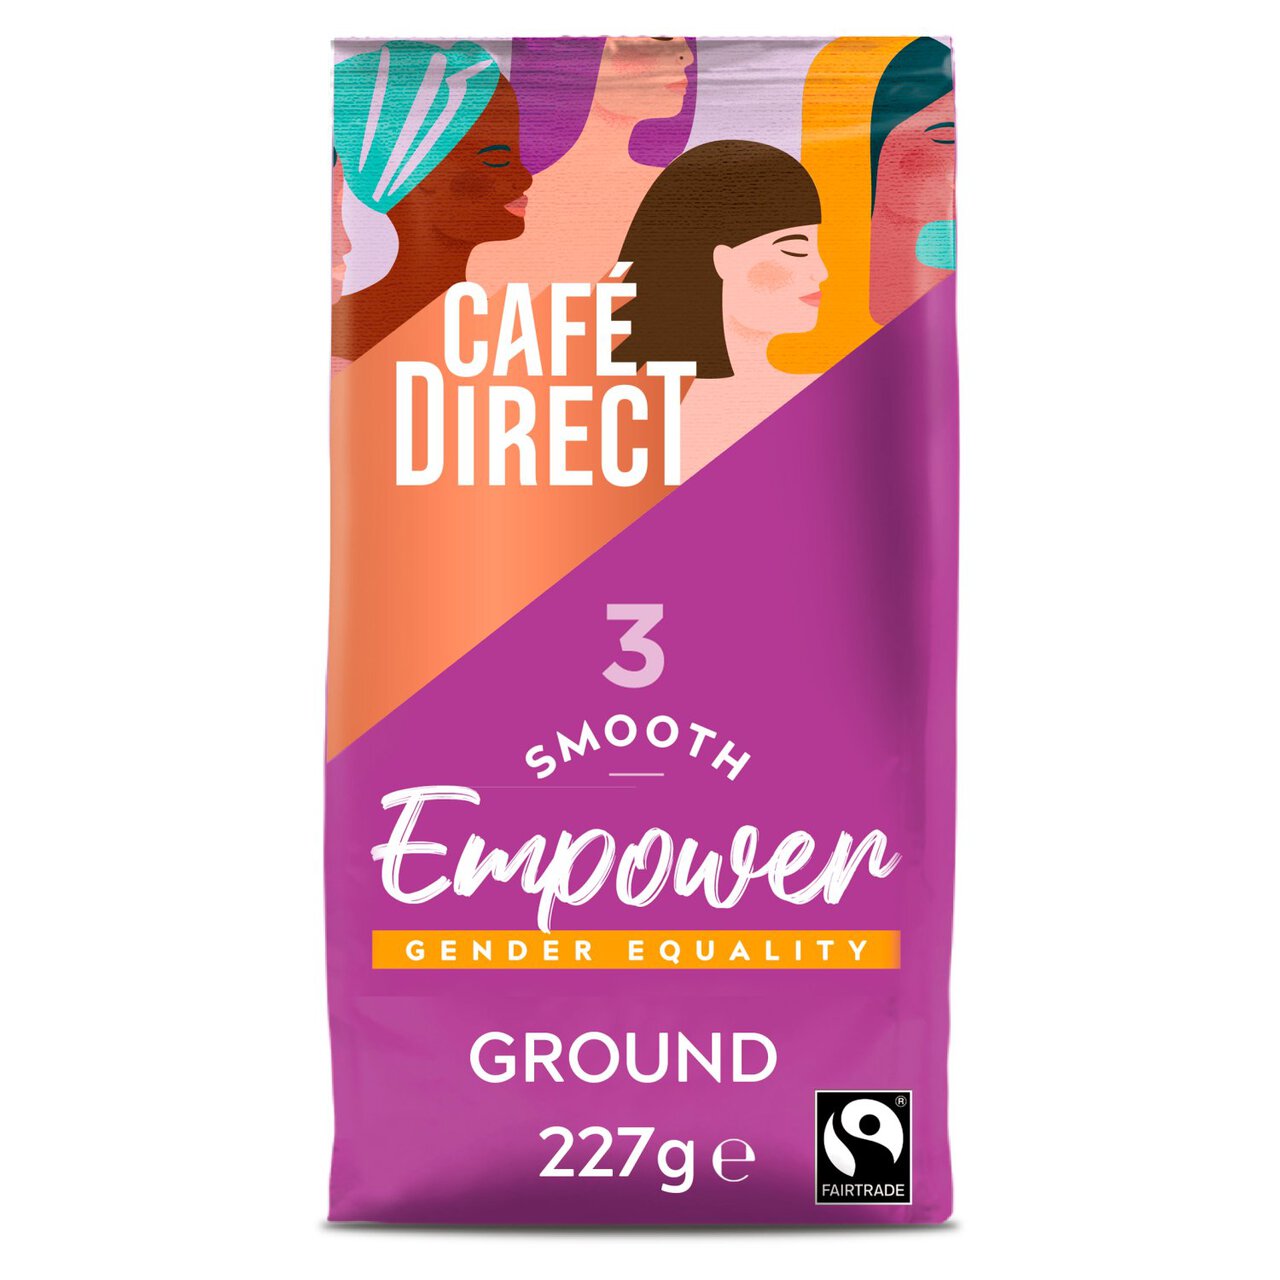 Cafedirect Fairtrade Empower Smooth Roast Ground Coffee 227g